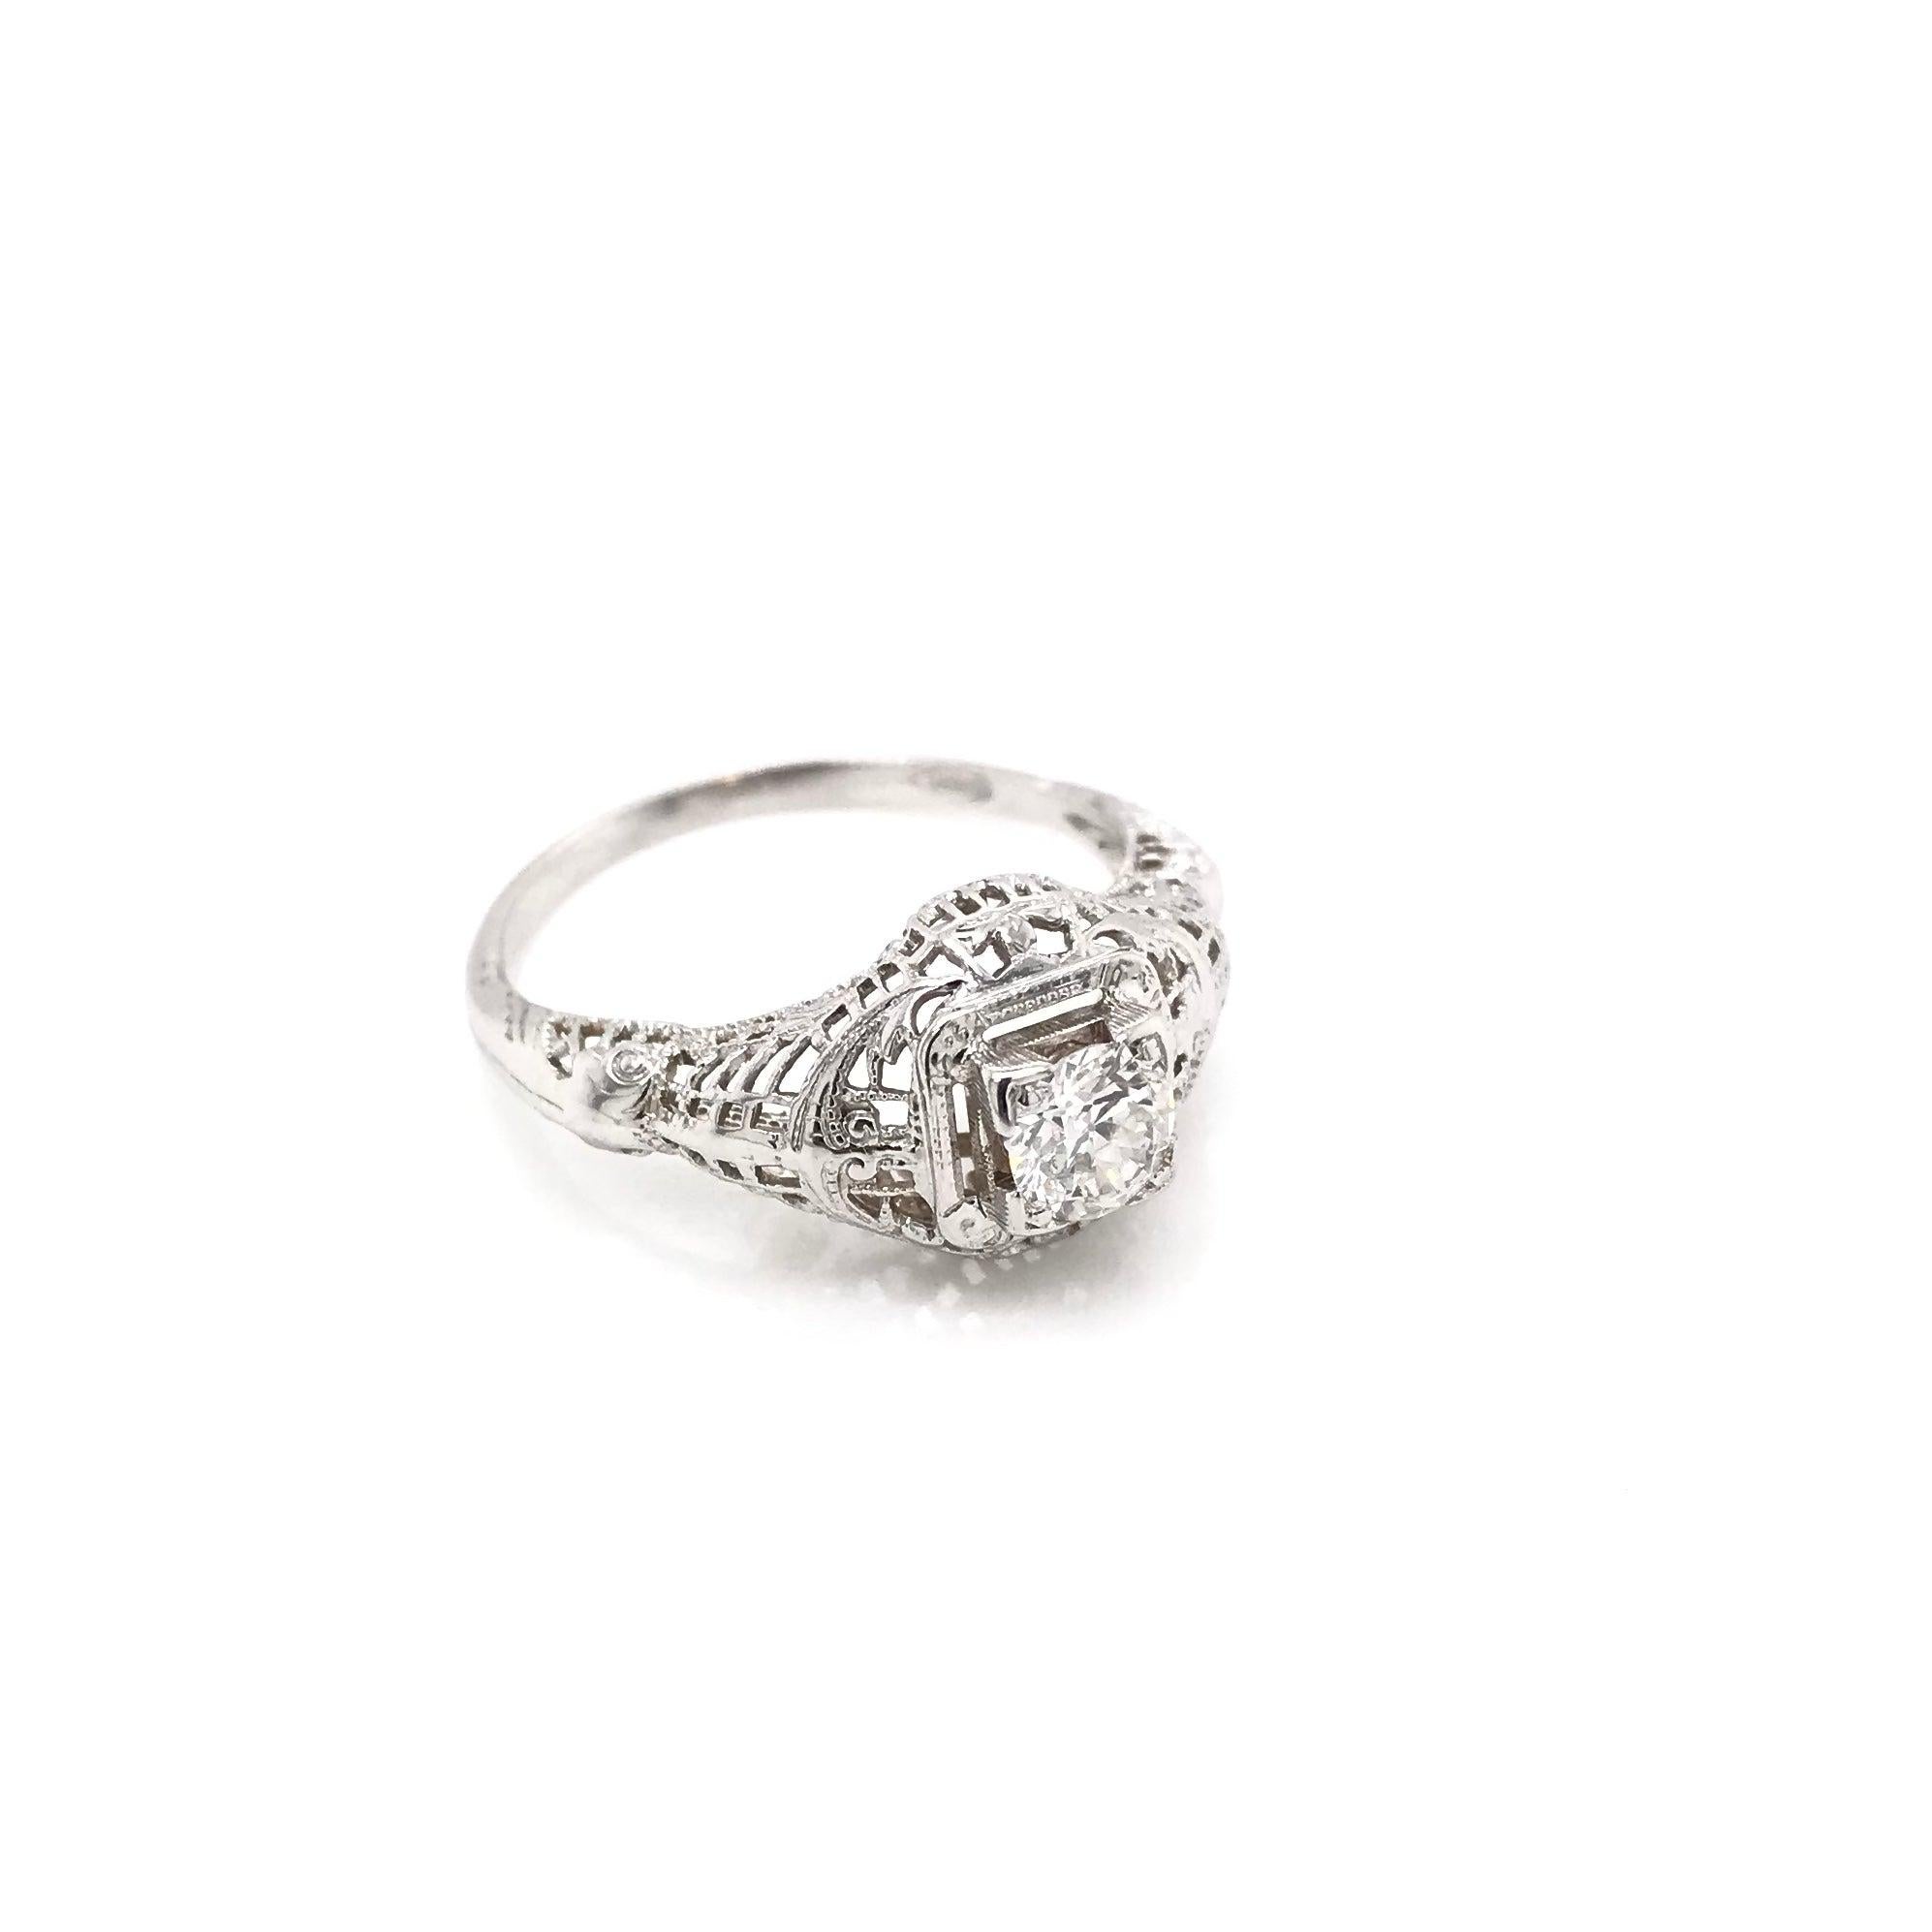 Antique Art Deco Filigree Solitaire Style Diamond Ring In Good Condition For Sale In Montgomery, AL